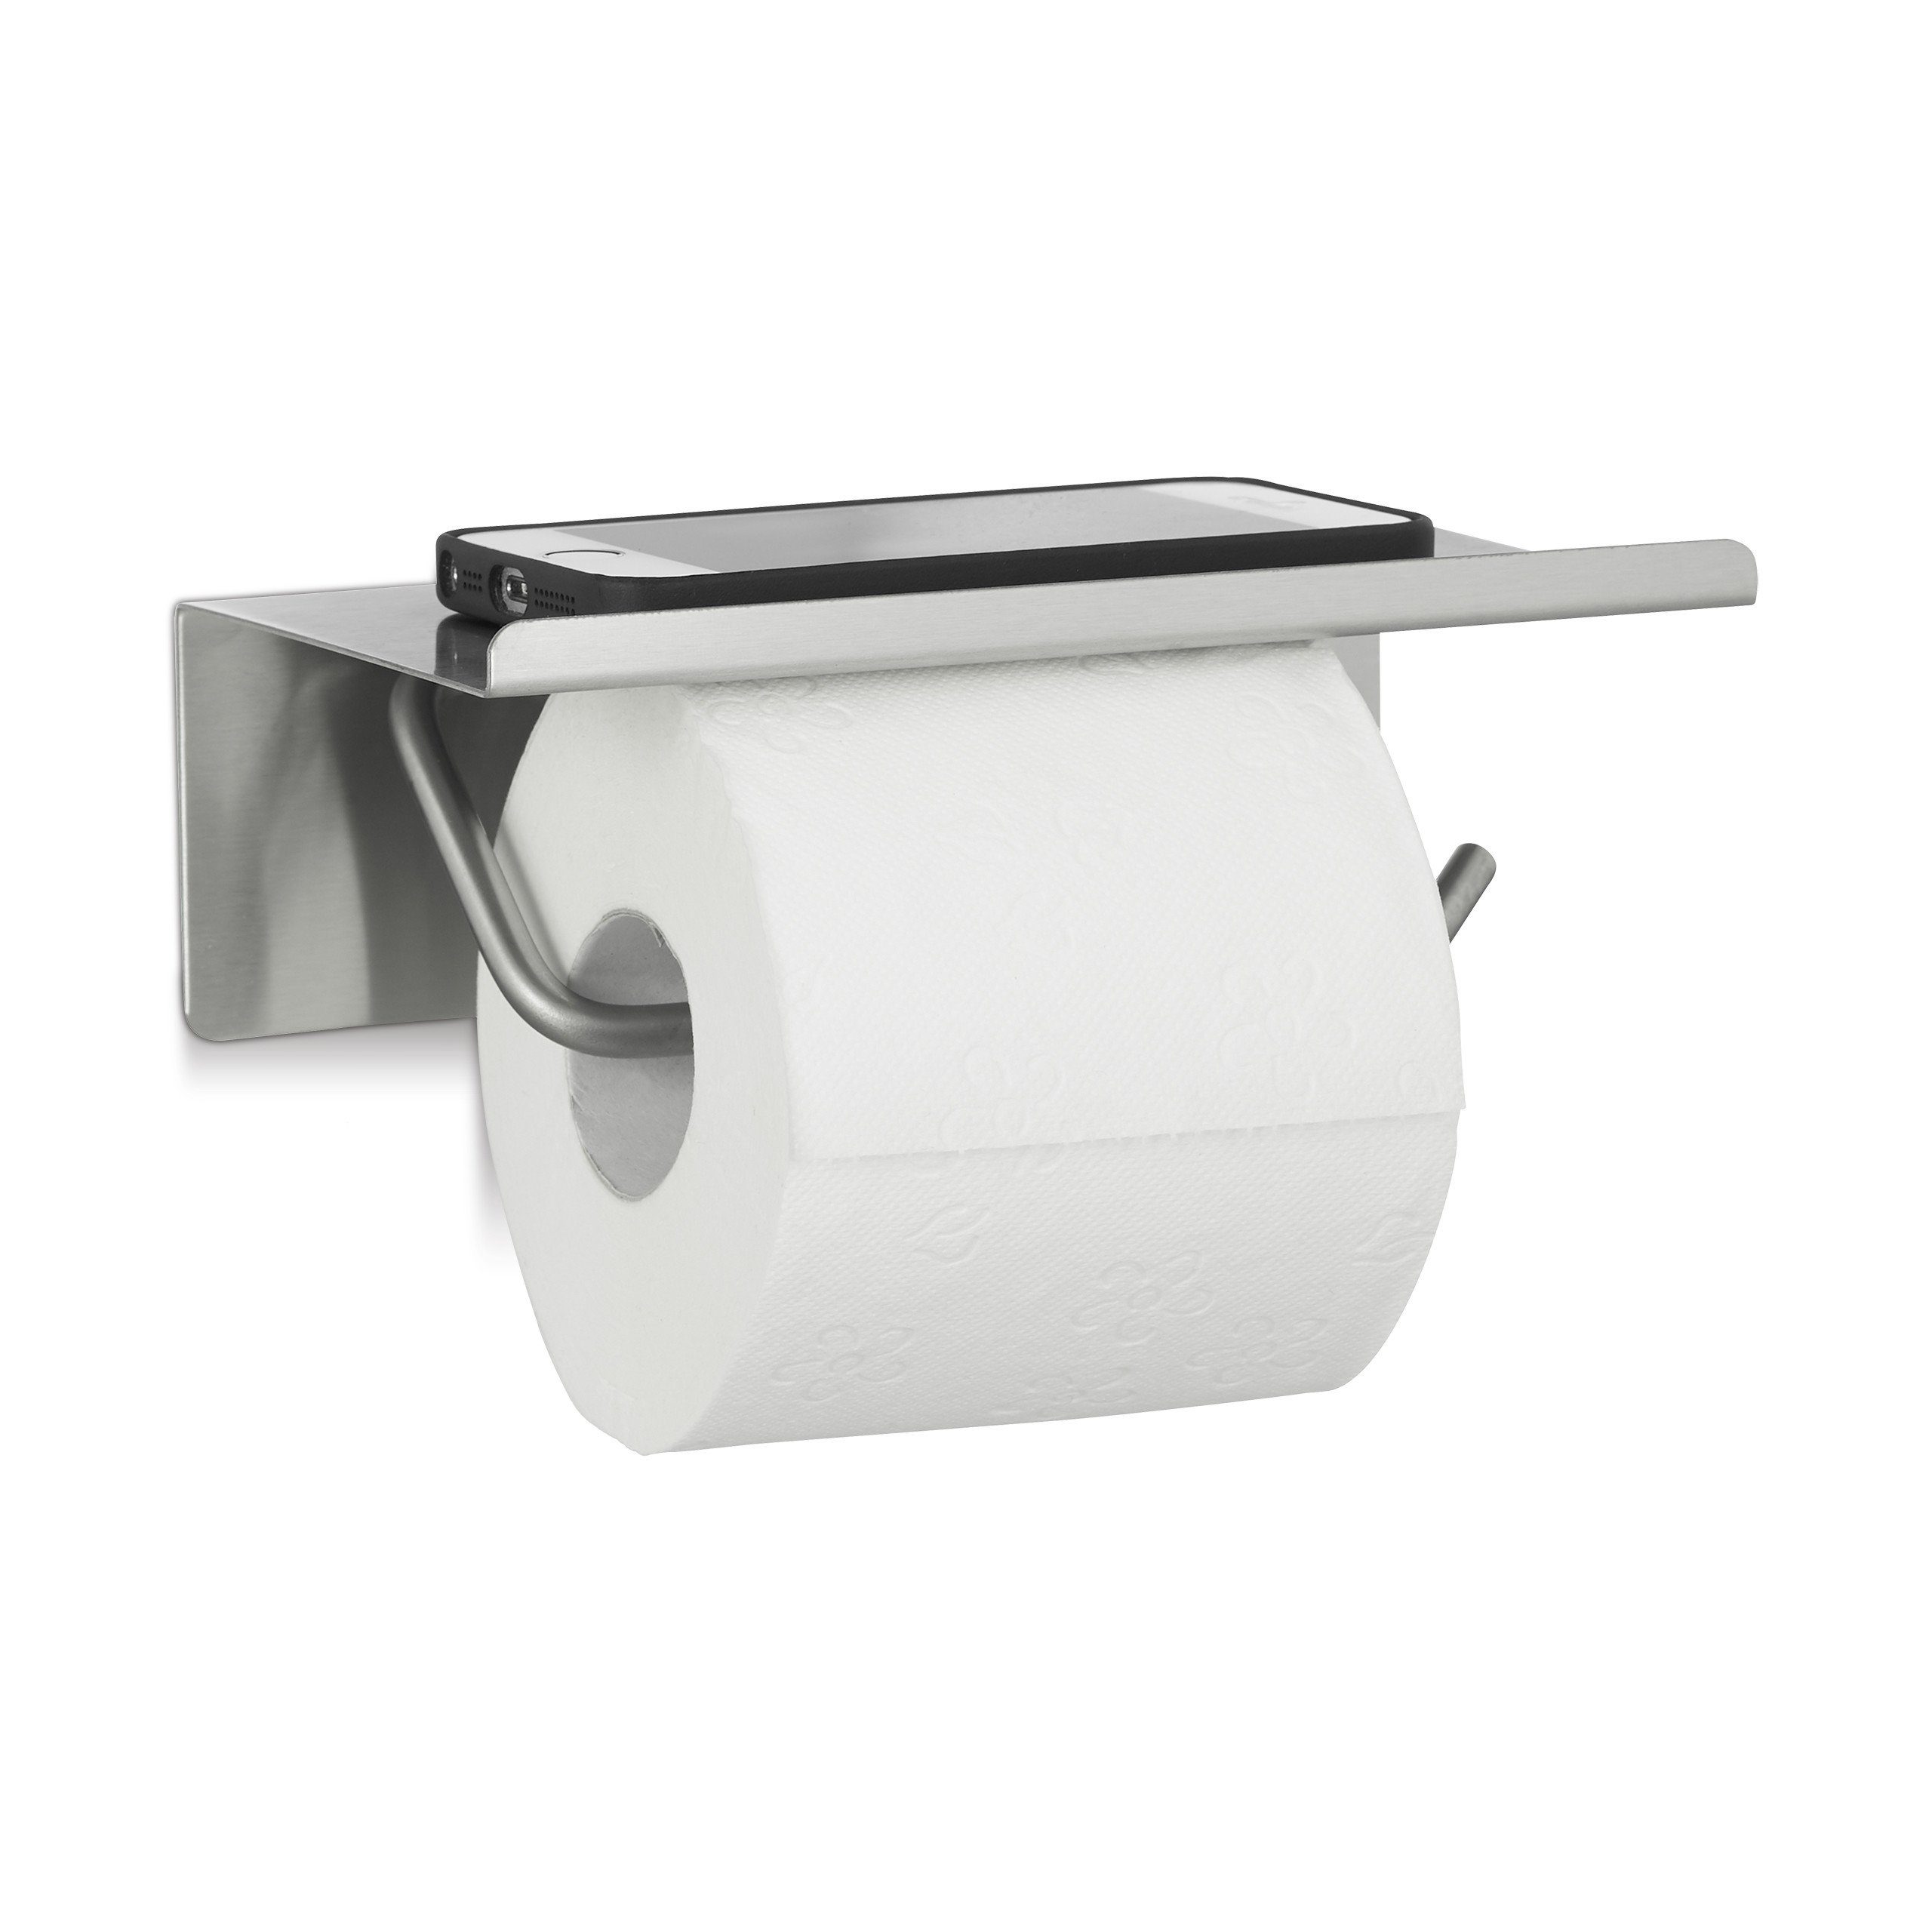 Toilettenpapierhalter Toilettenpapierhalter Edelstahl relaxdays